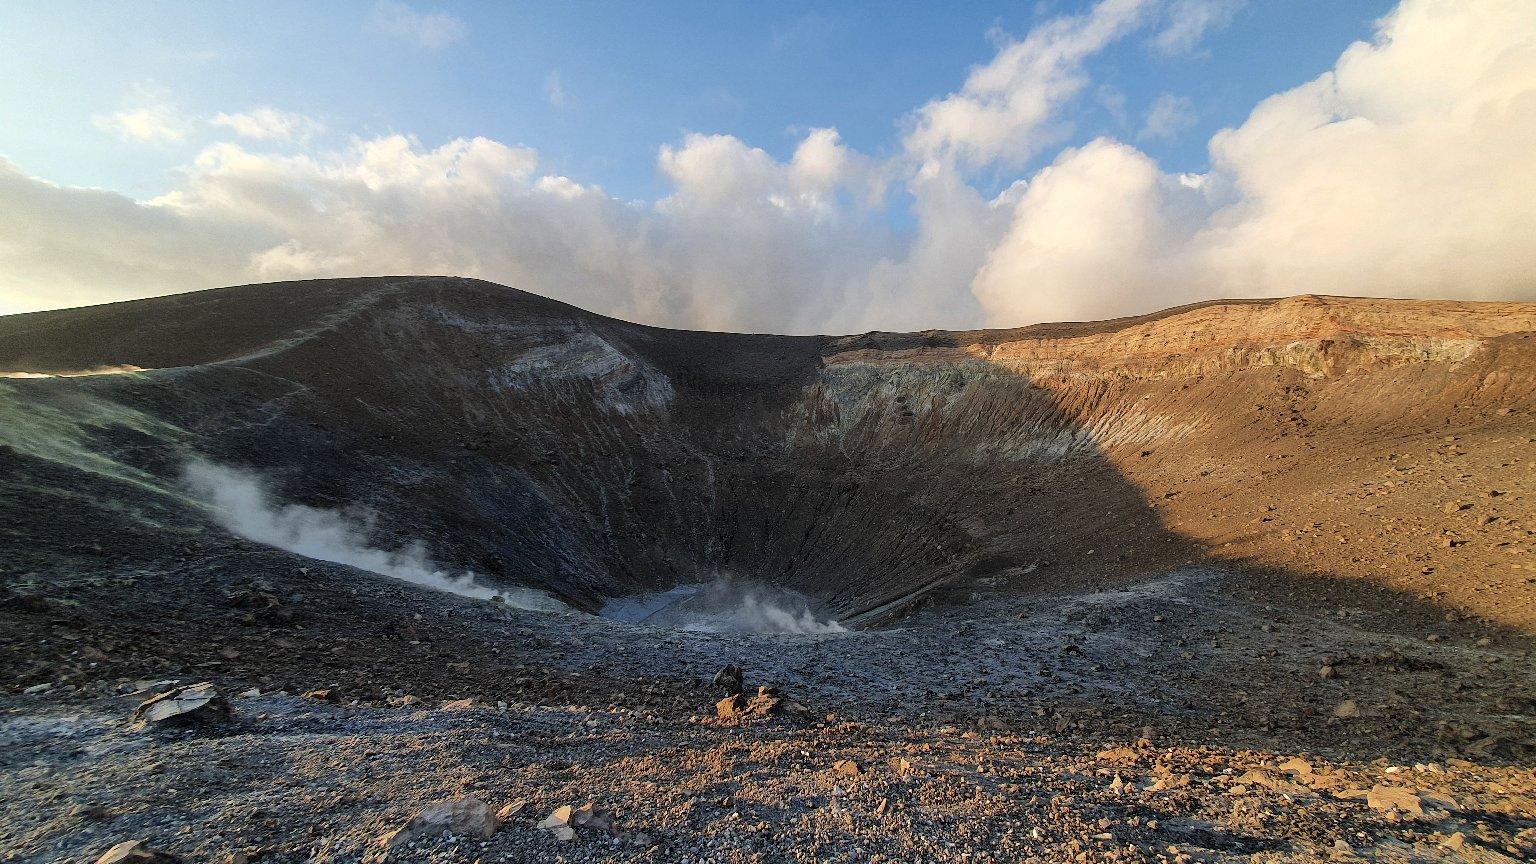 risalita al cratere di Vulcano visita guidata